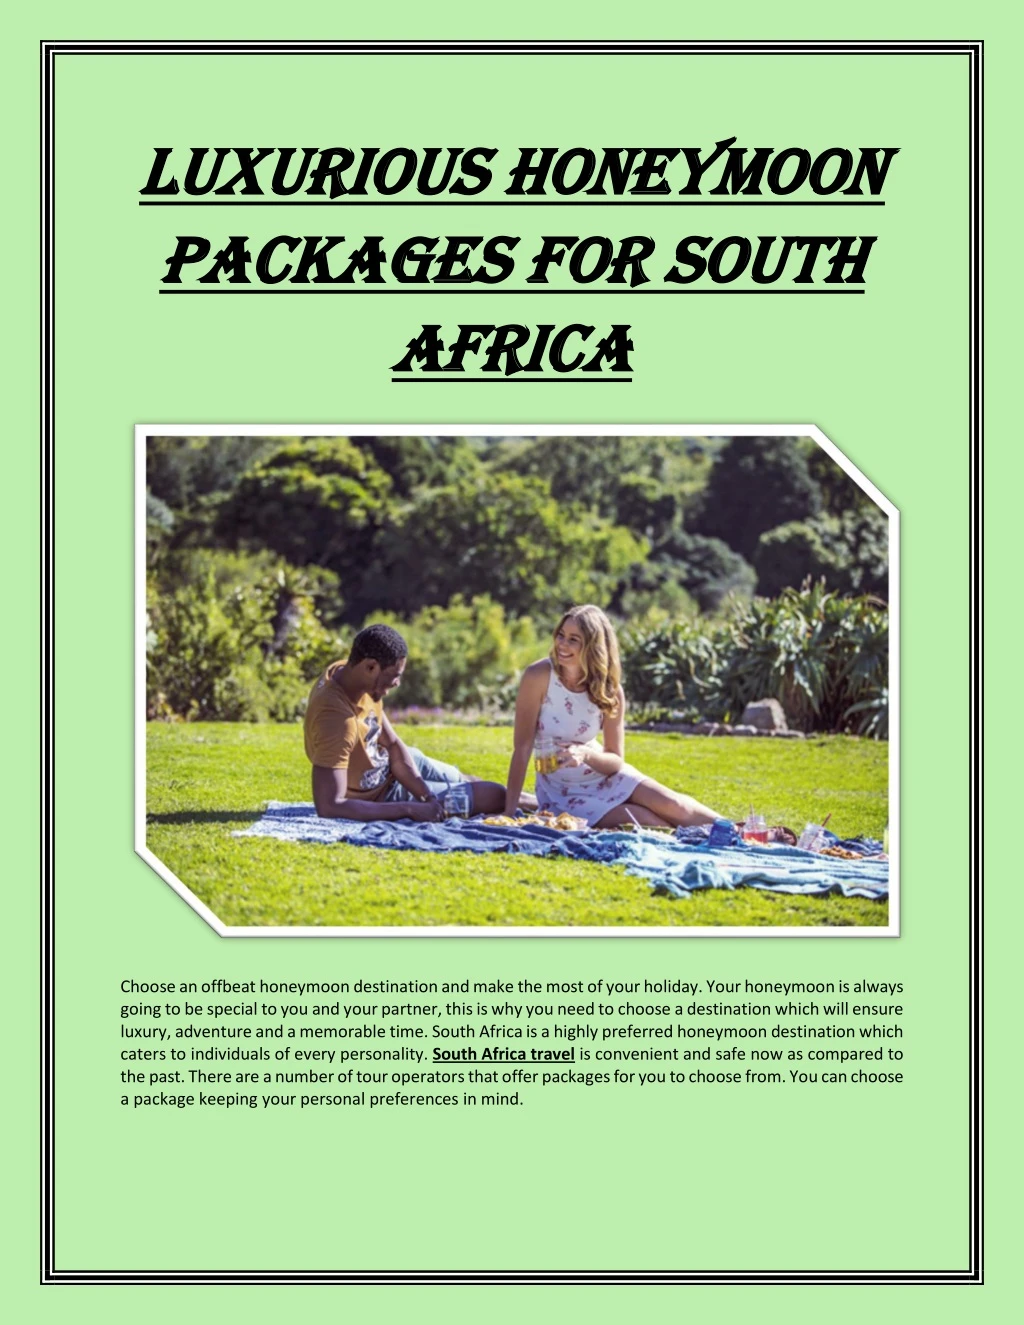 luxurious luxurious honeymoon honeymoon packages